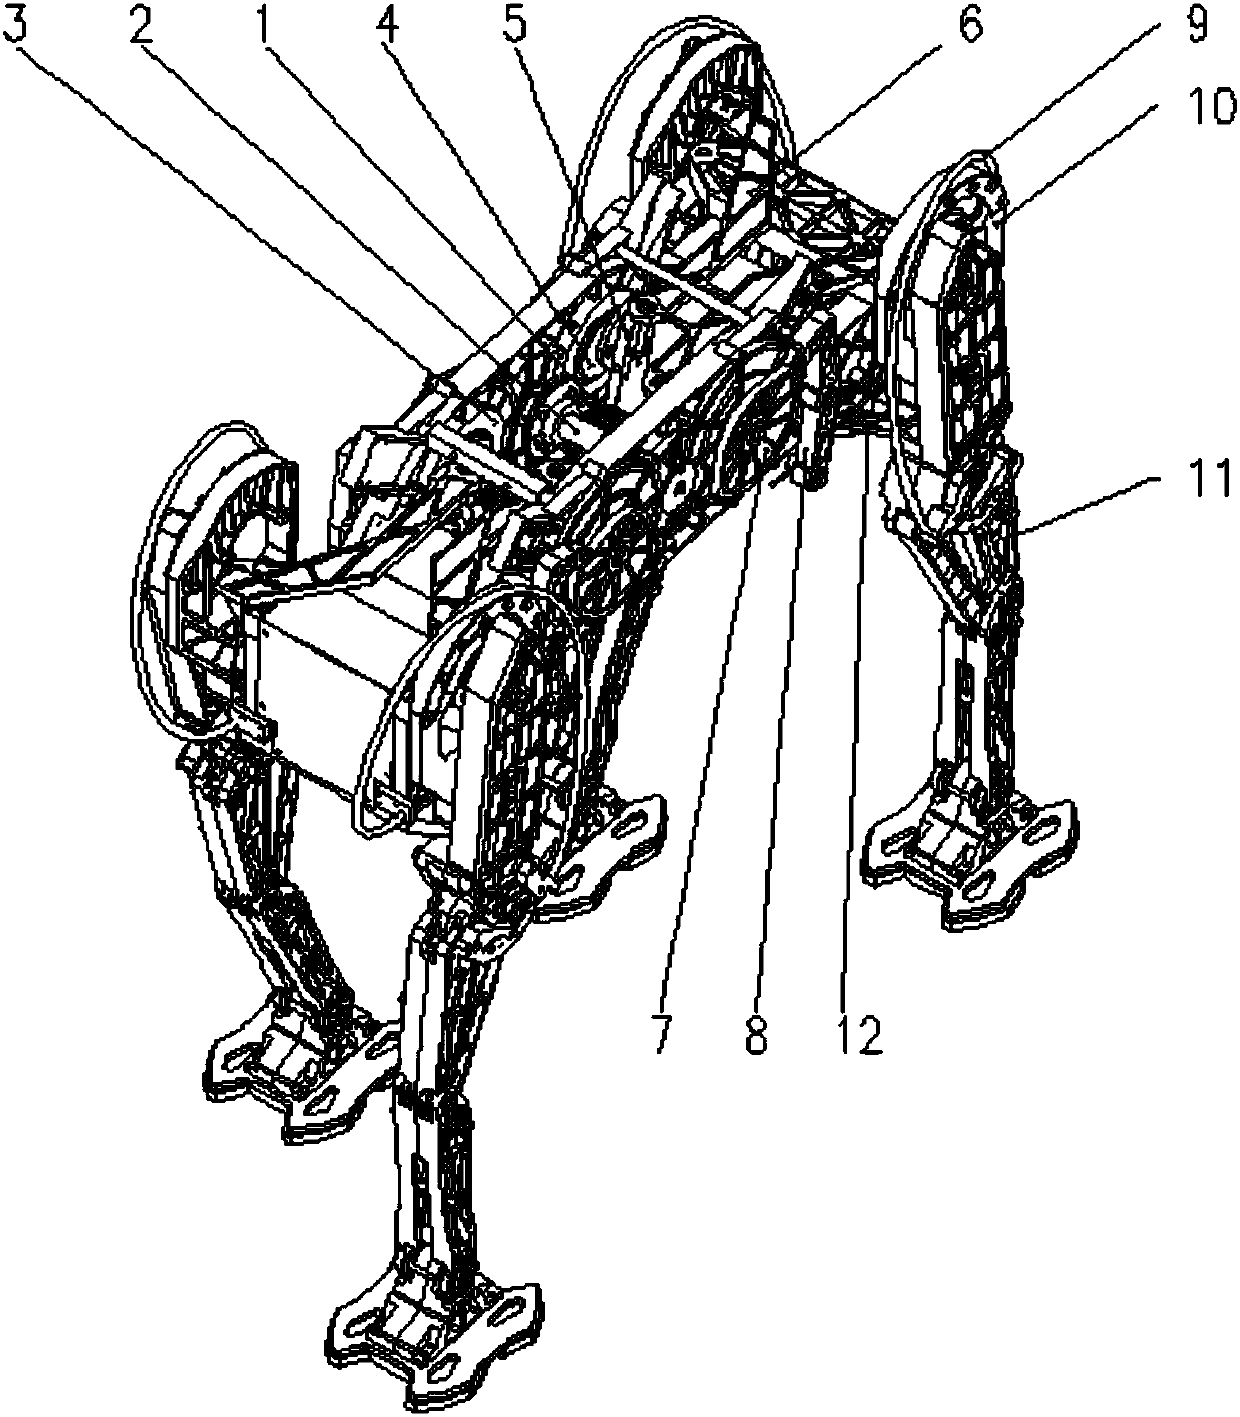 Four-foot bionic walking robot